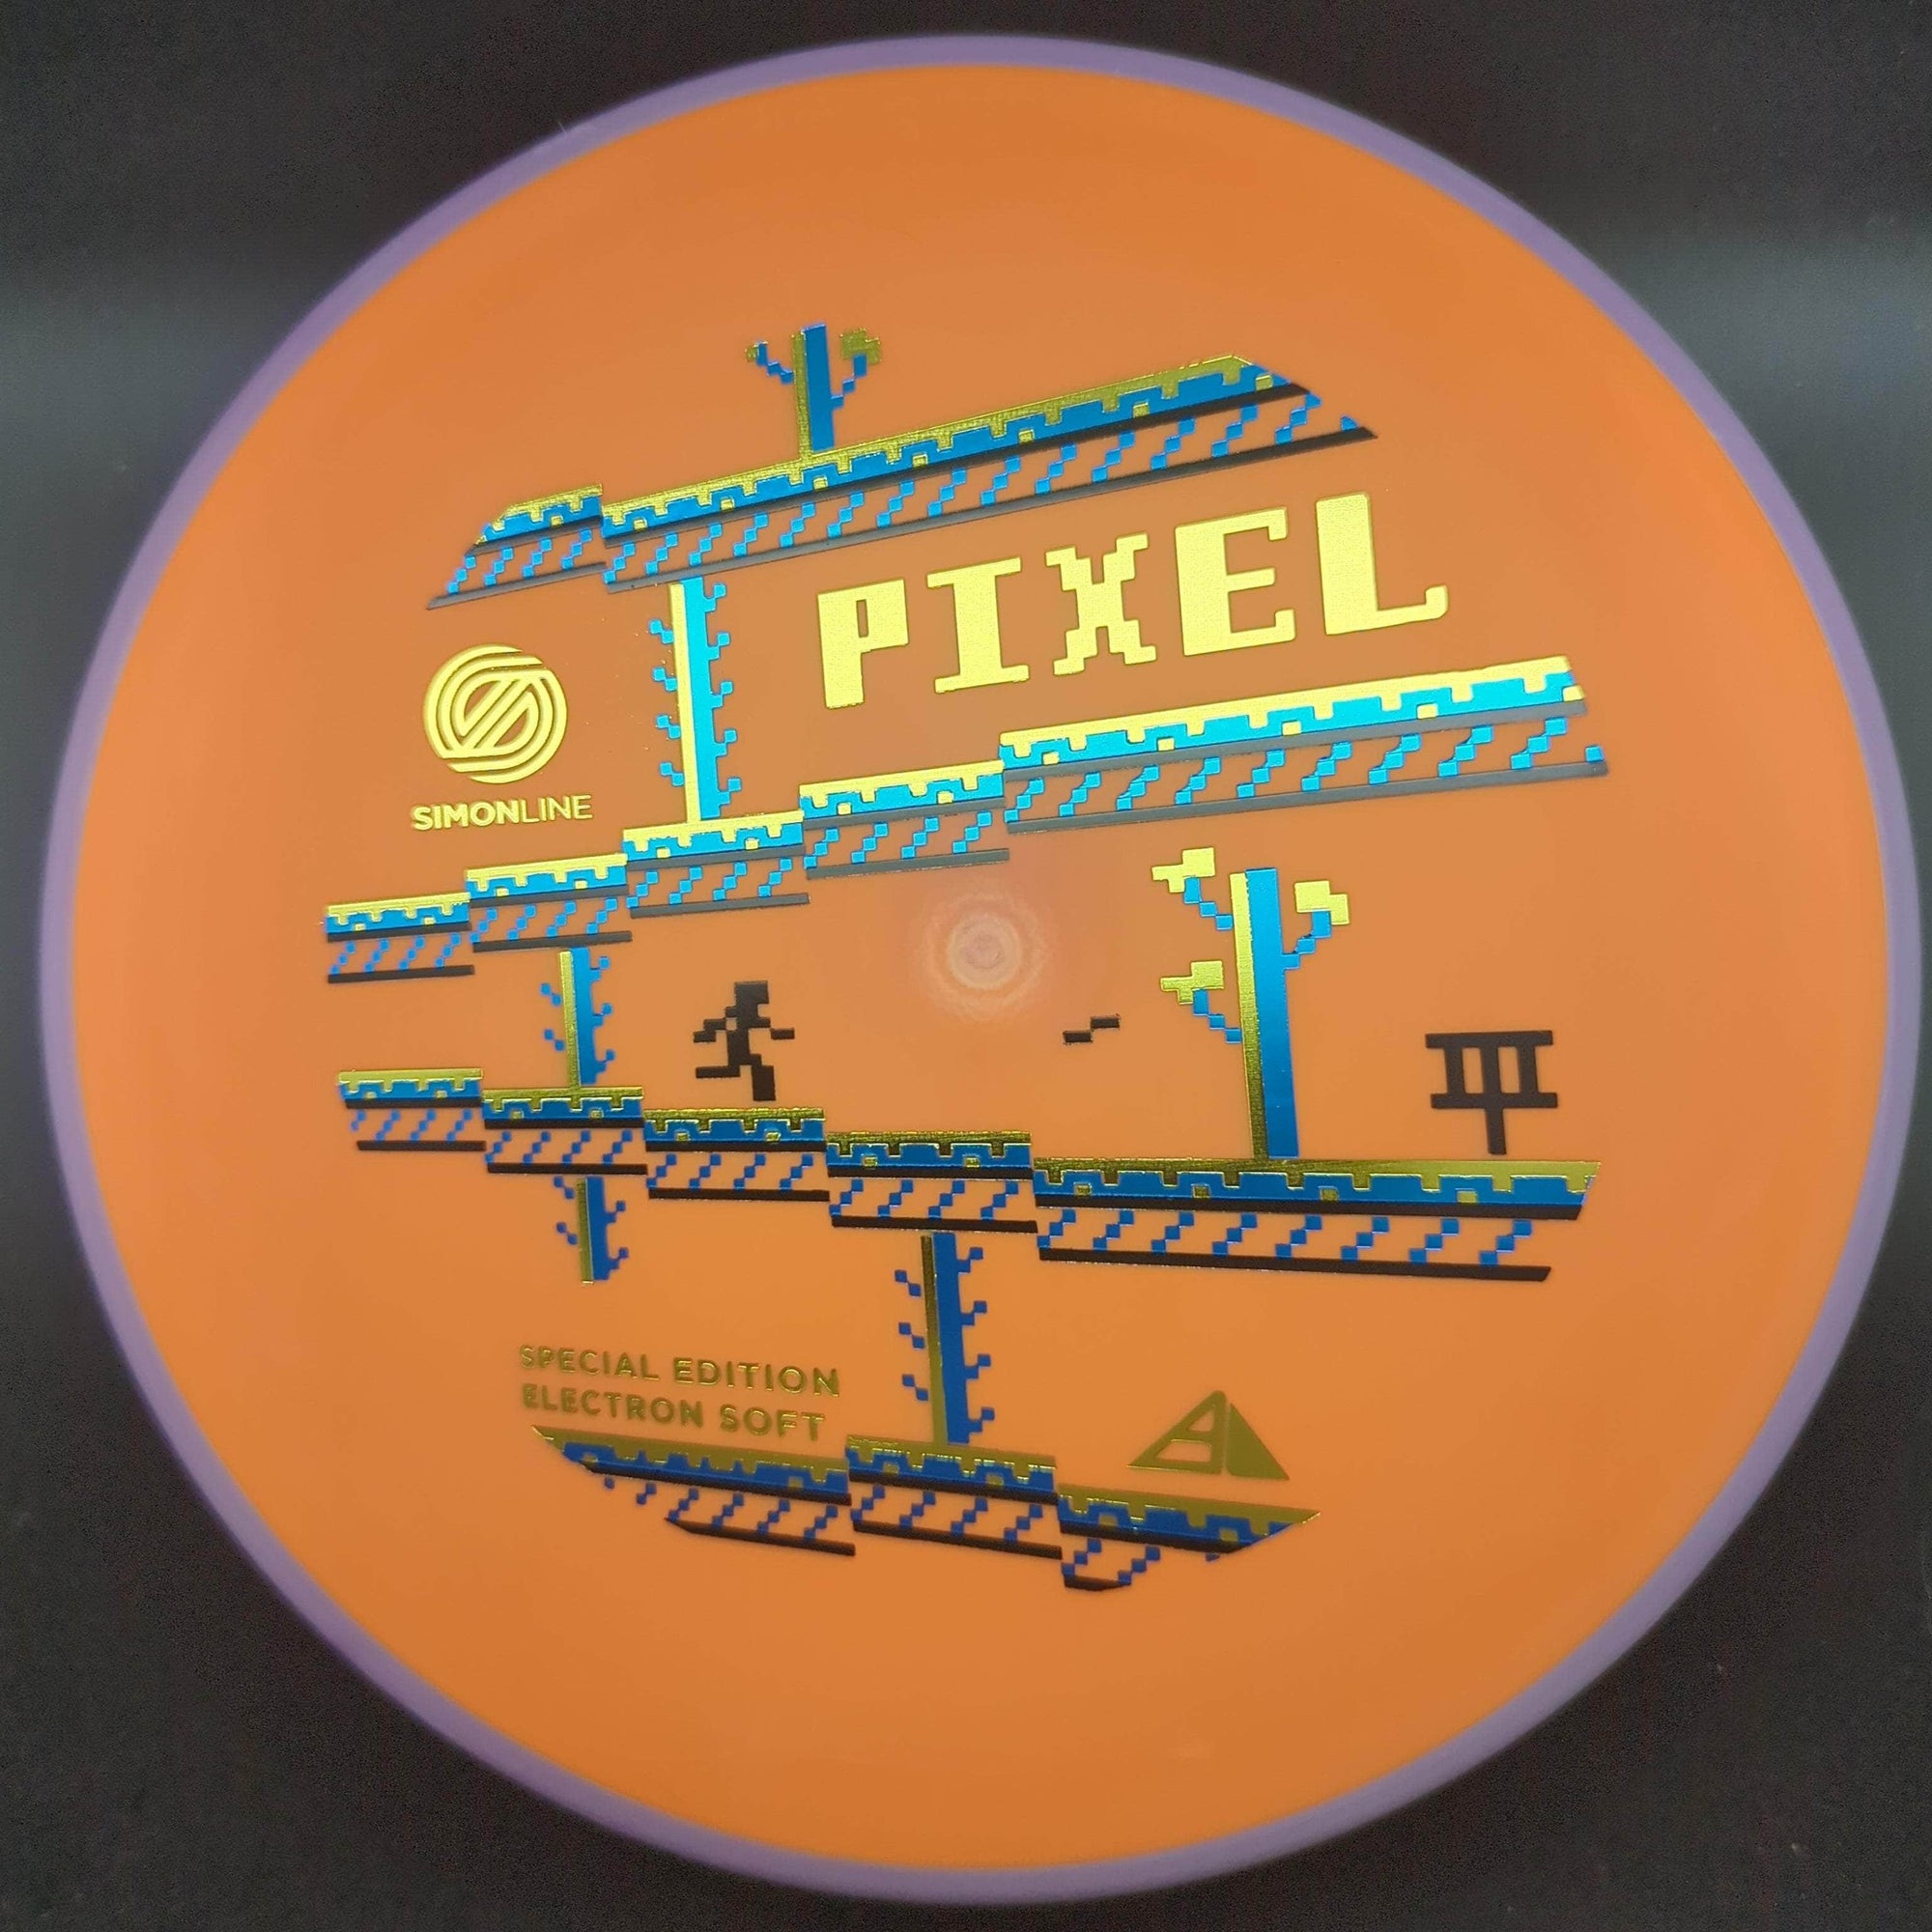 Axiom Putter Purple Rim Orange Plate 172g Pixel, Electron Soft, Special Edition